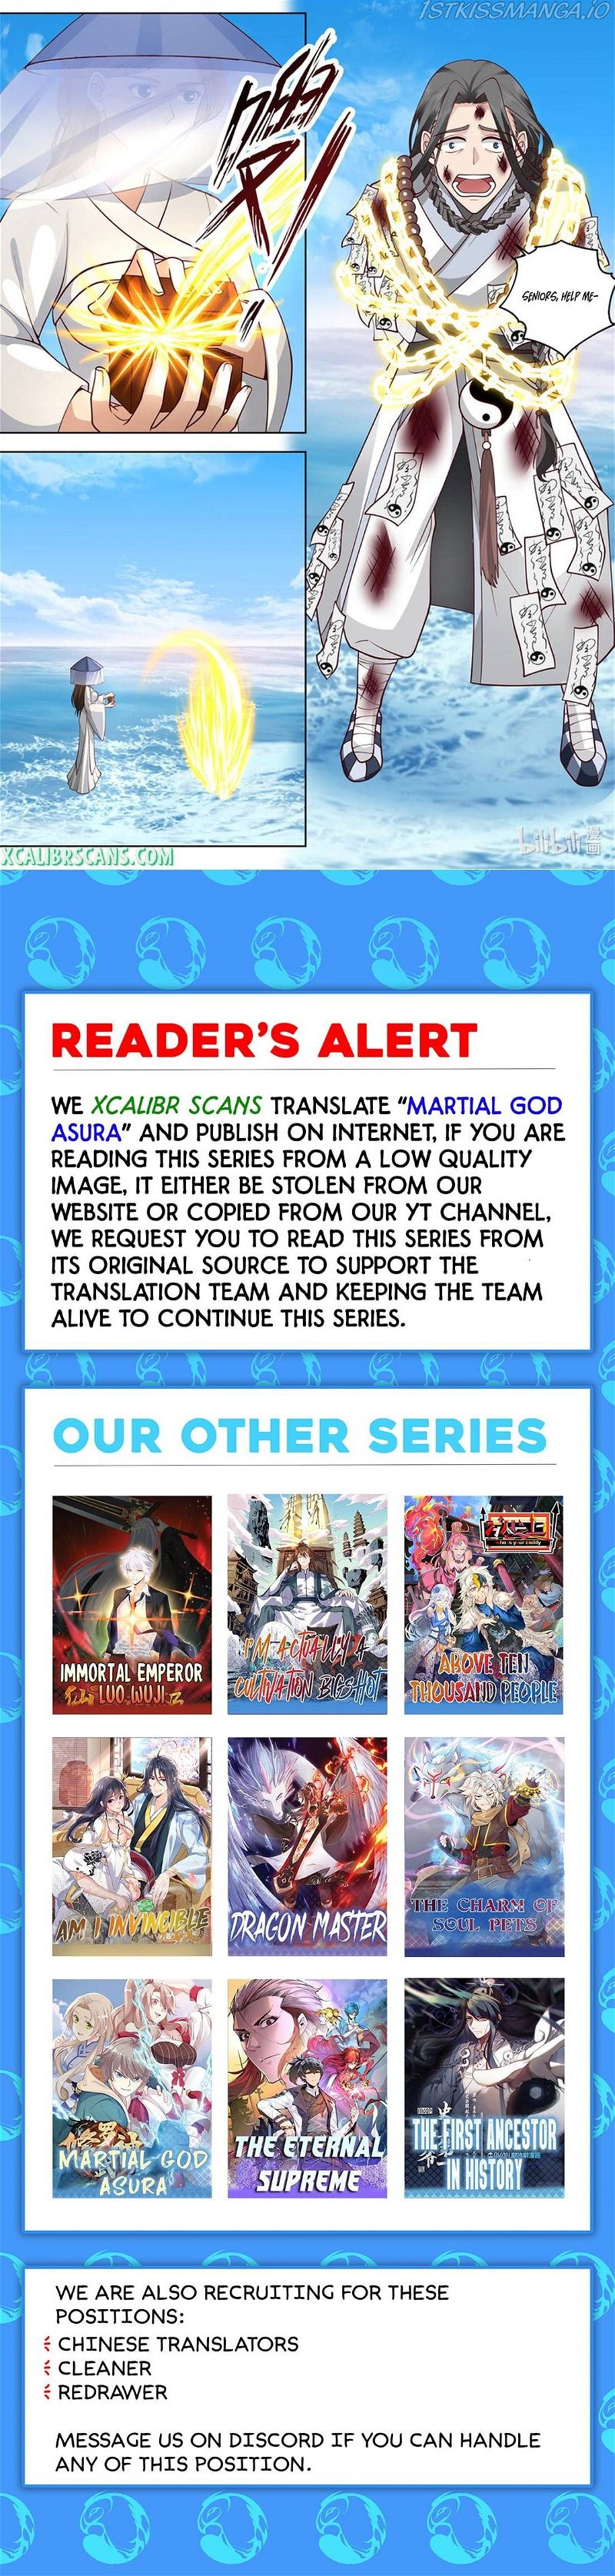 Martial God Asura Chapter 613 page 10